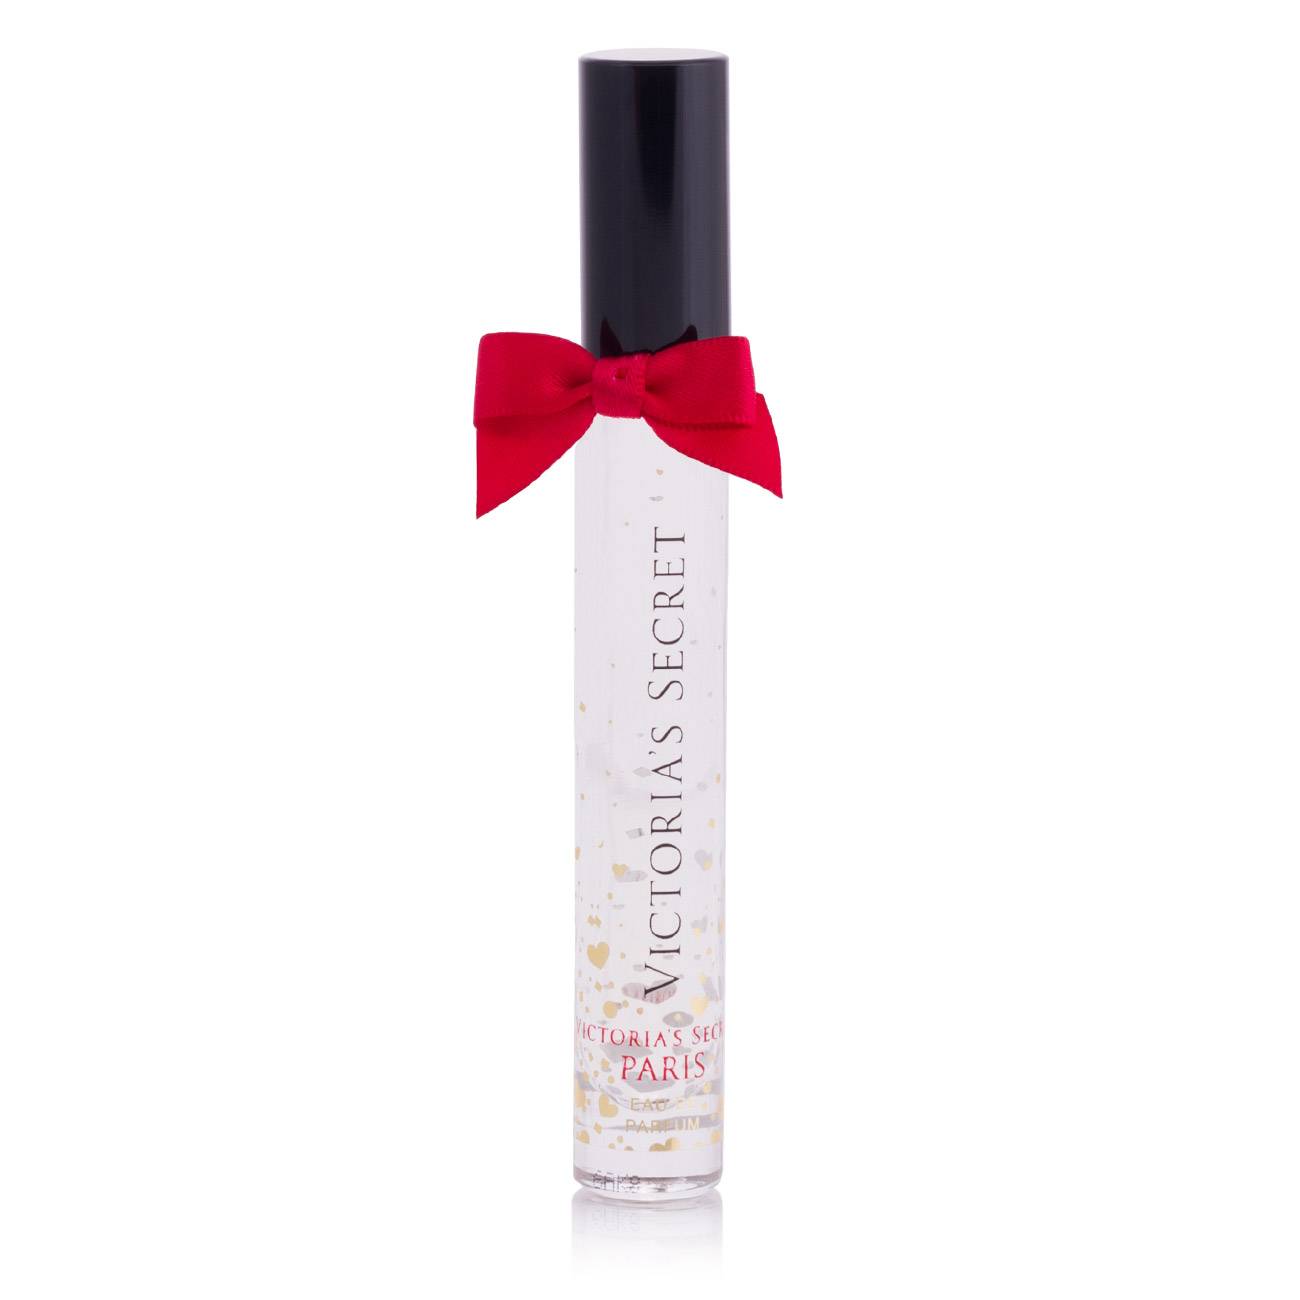 Apa de Parfum Victoria's Secret BOMBSHELL PARIS ROLLERBALL 7ml cu comanda online